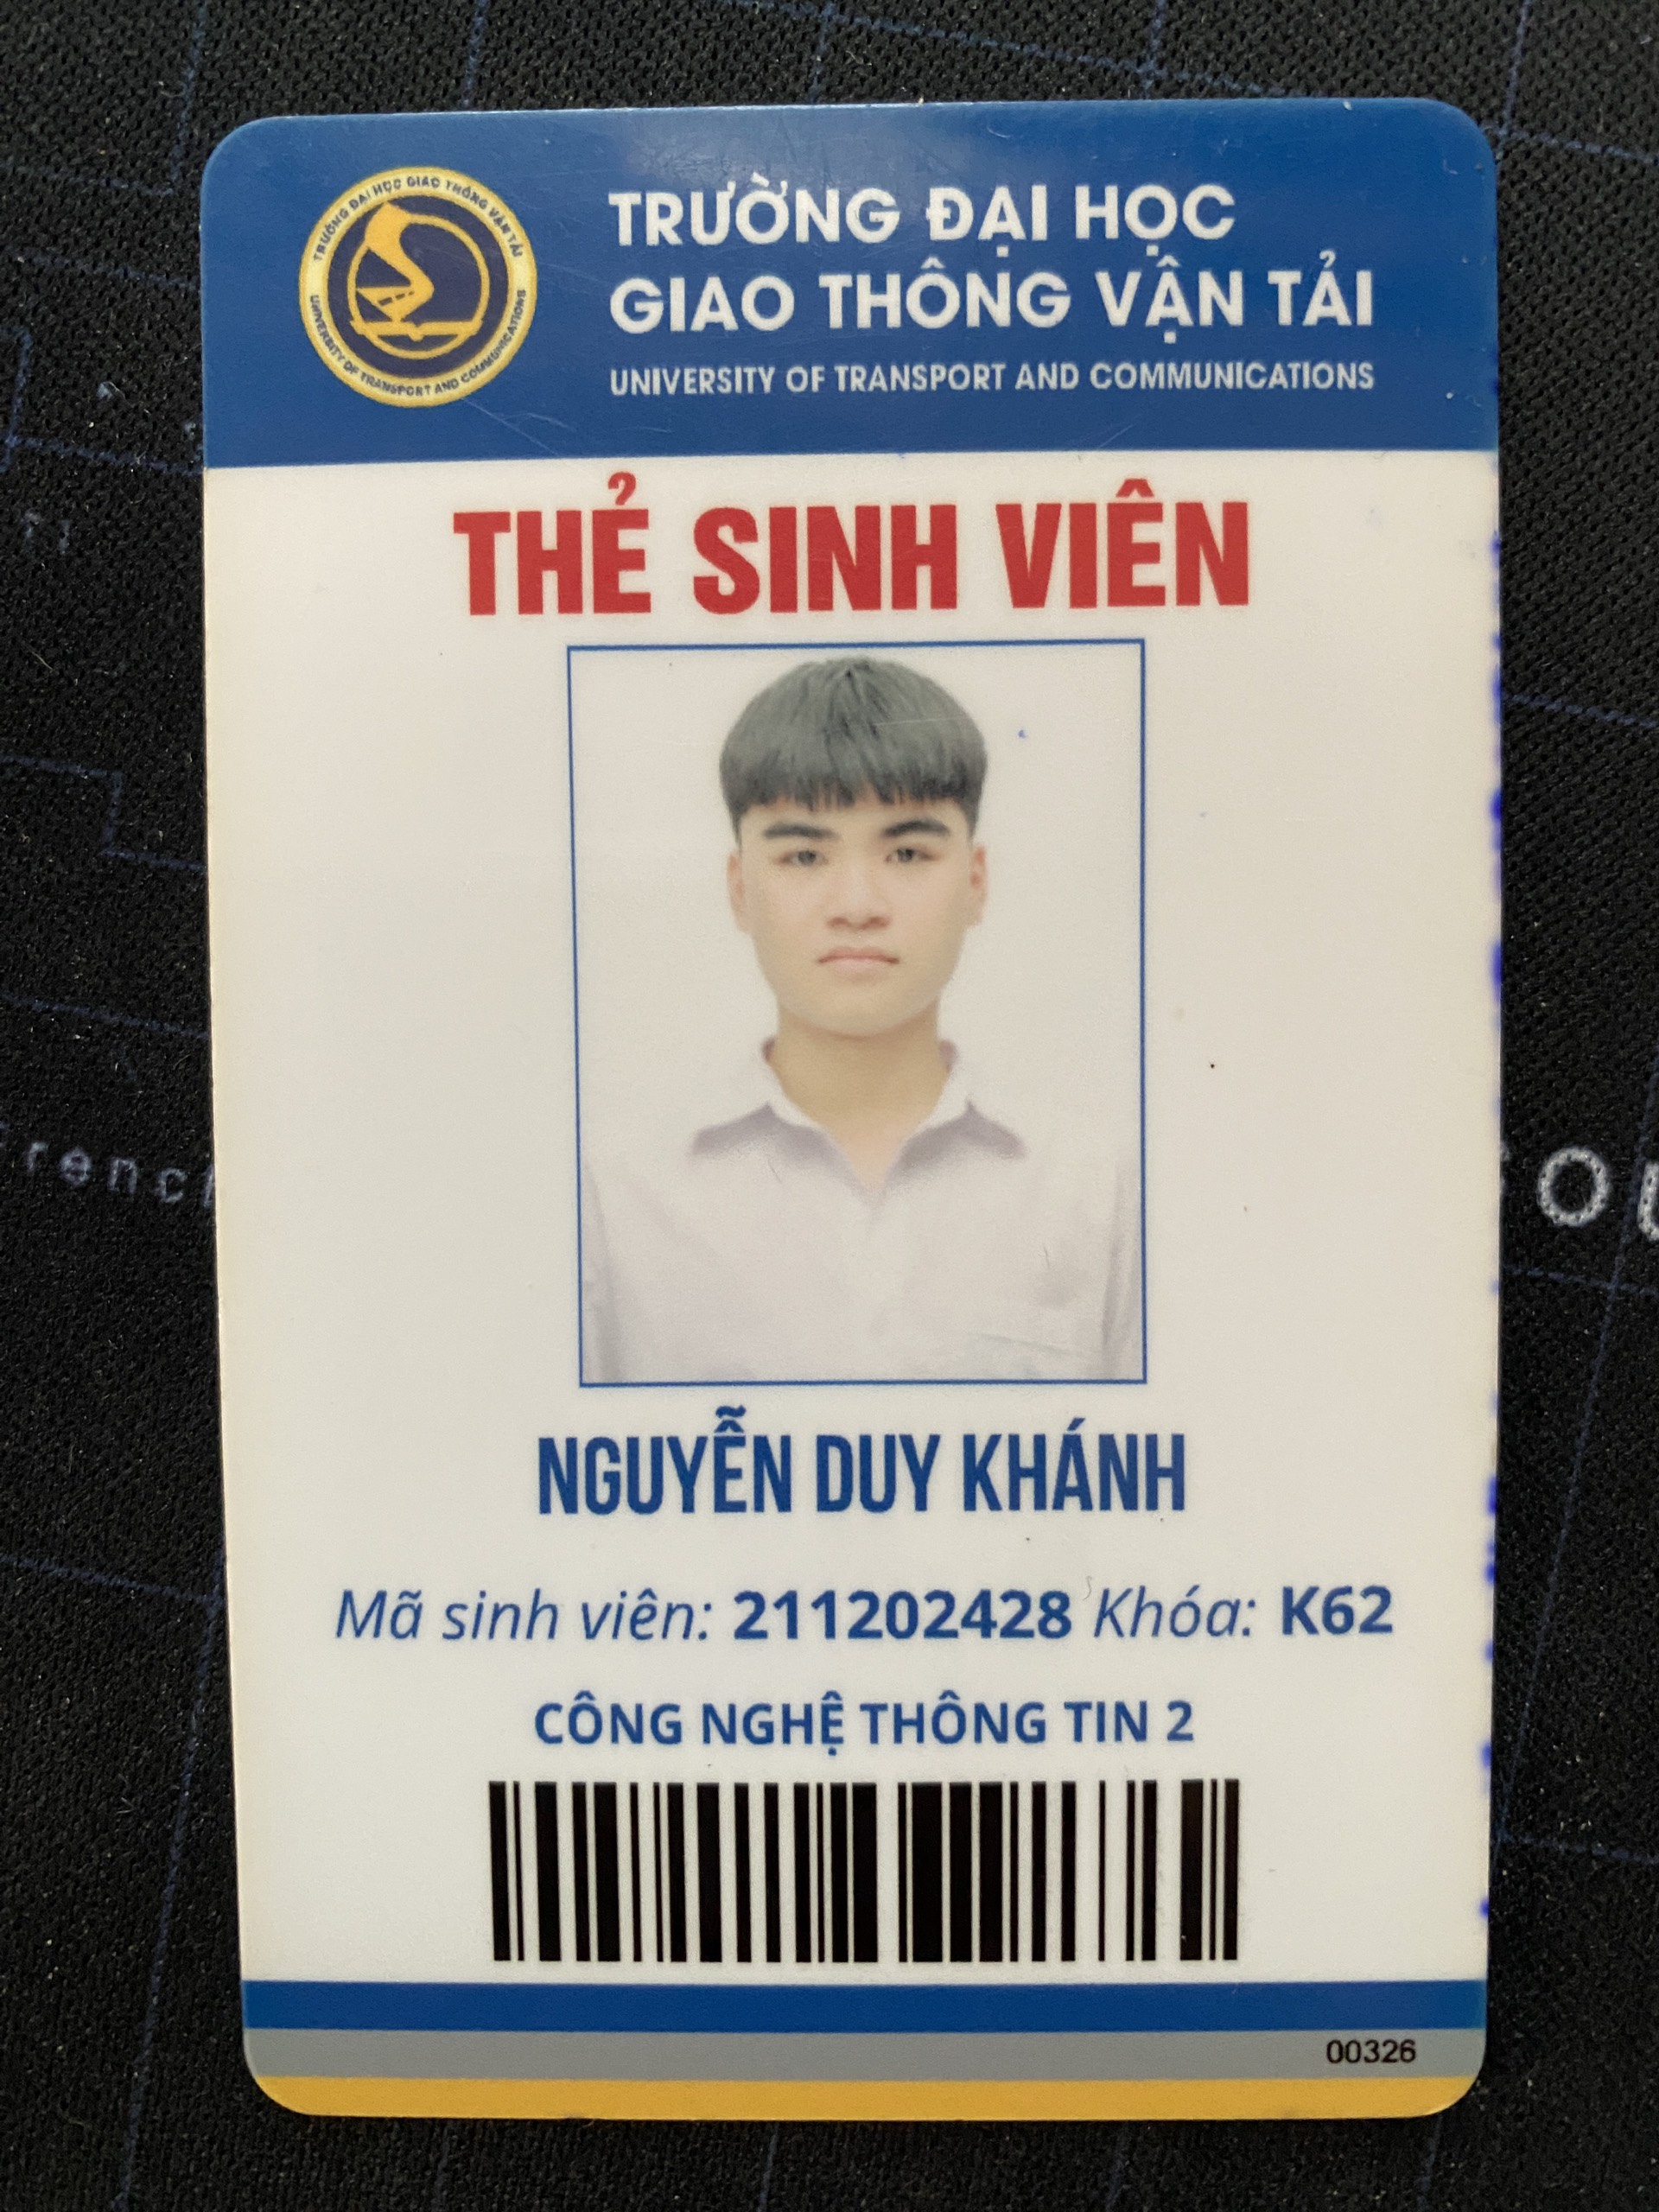 Nguyen Duy Khanh